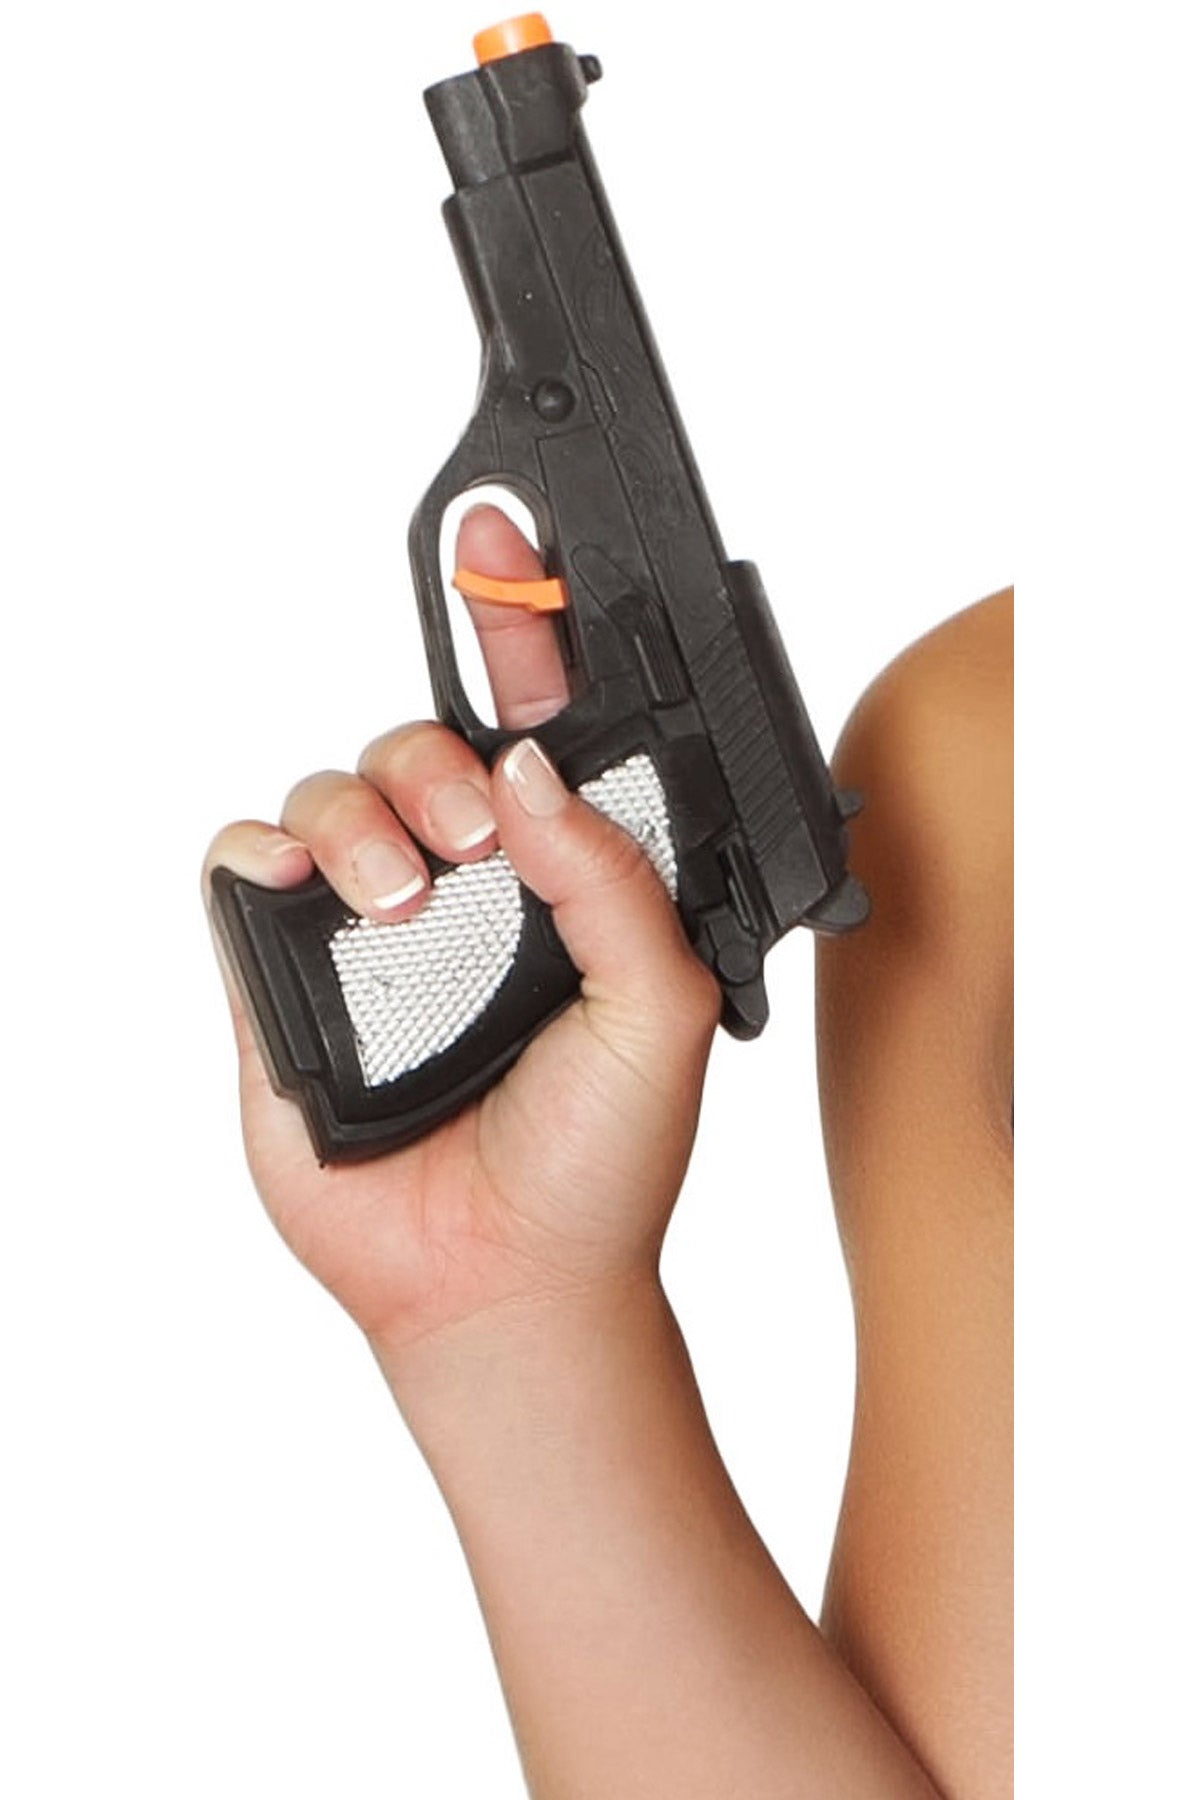 Single Toy Deagle Pistol Hand Gun Arms Weapon Costume Accessory Roma  GUN105